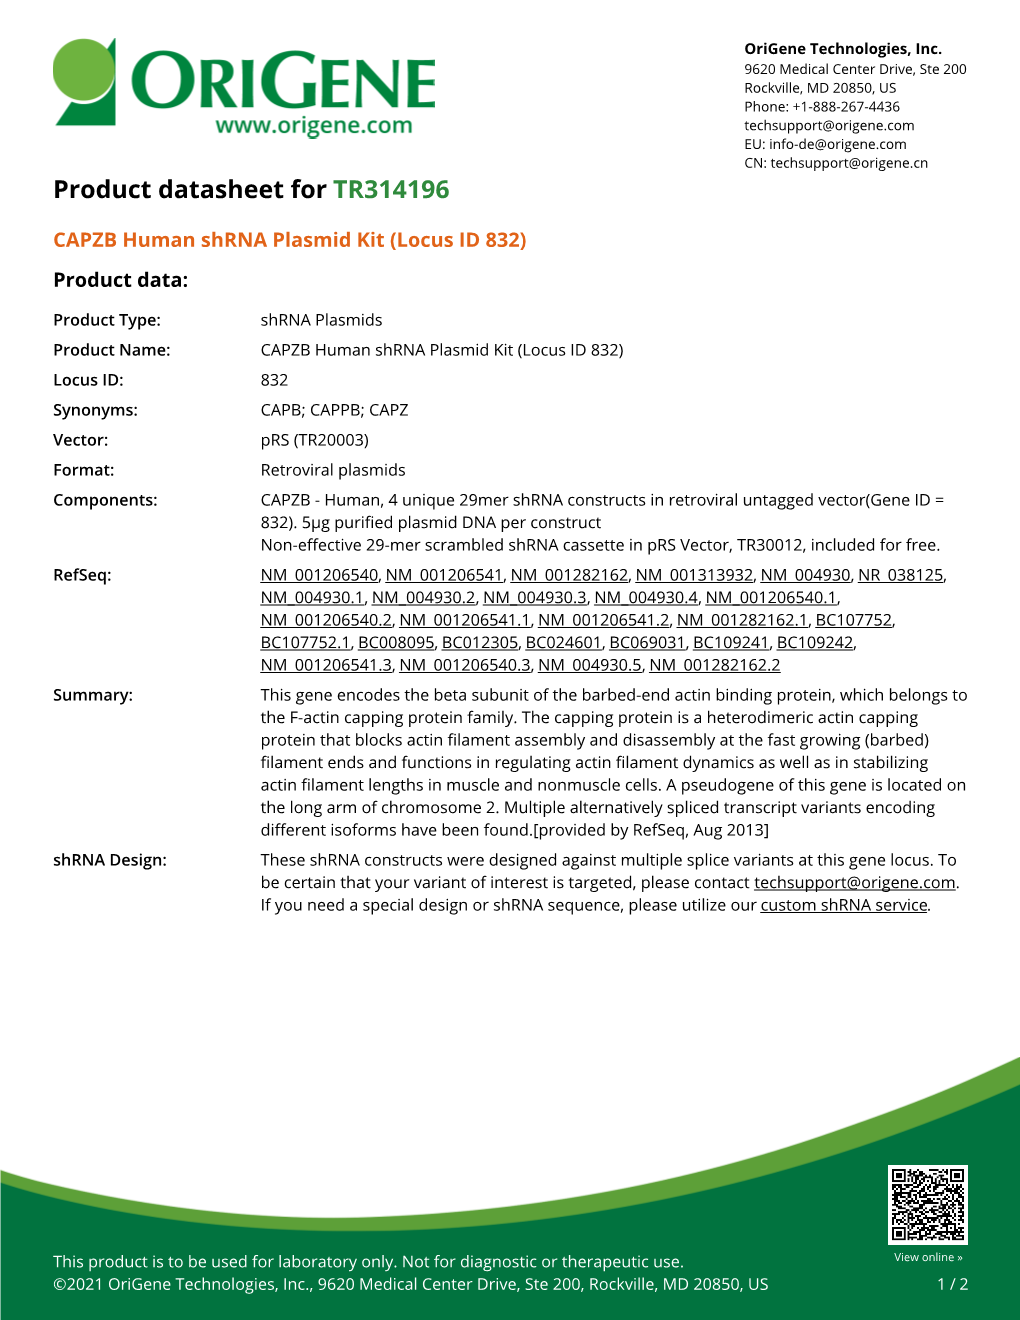 CAPZB Human Shrna Plasmid Kit (Locus ID 832) Product Data